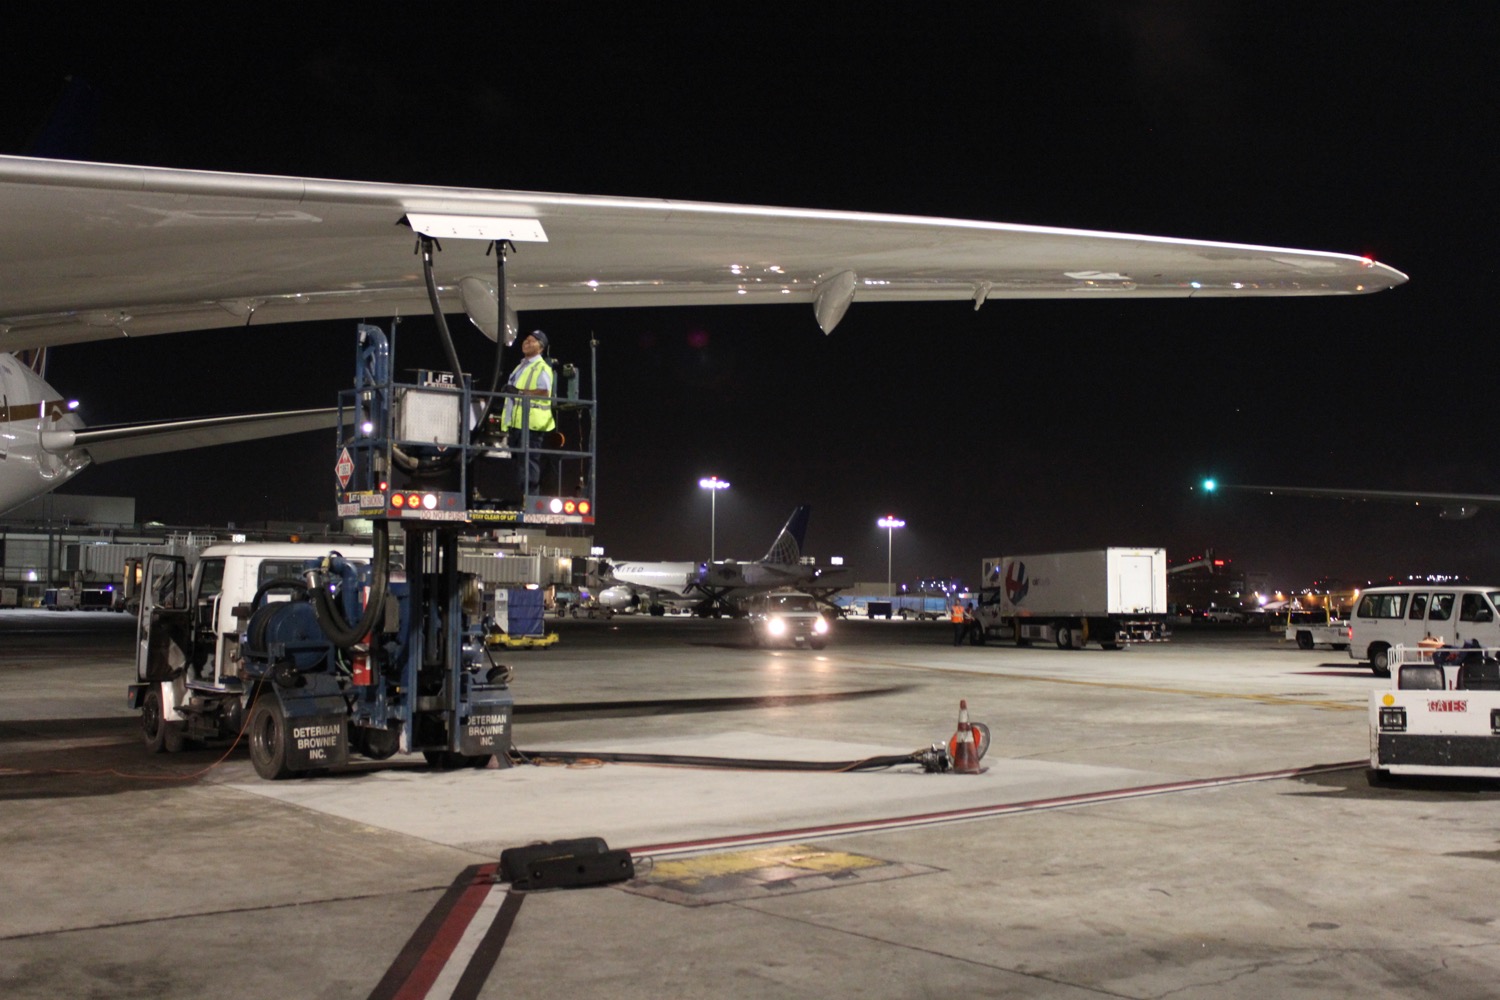 a man standing on a platform next to an airplane